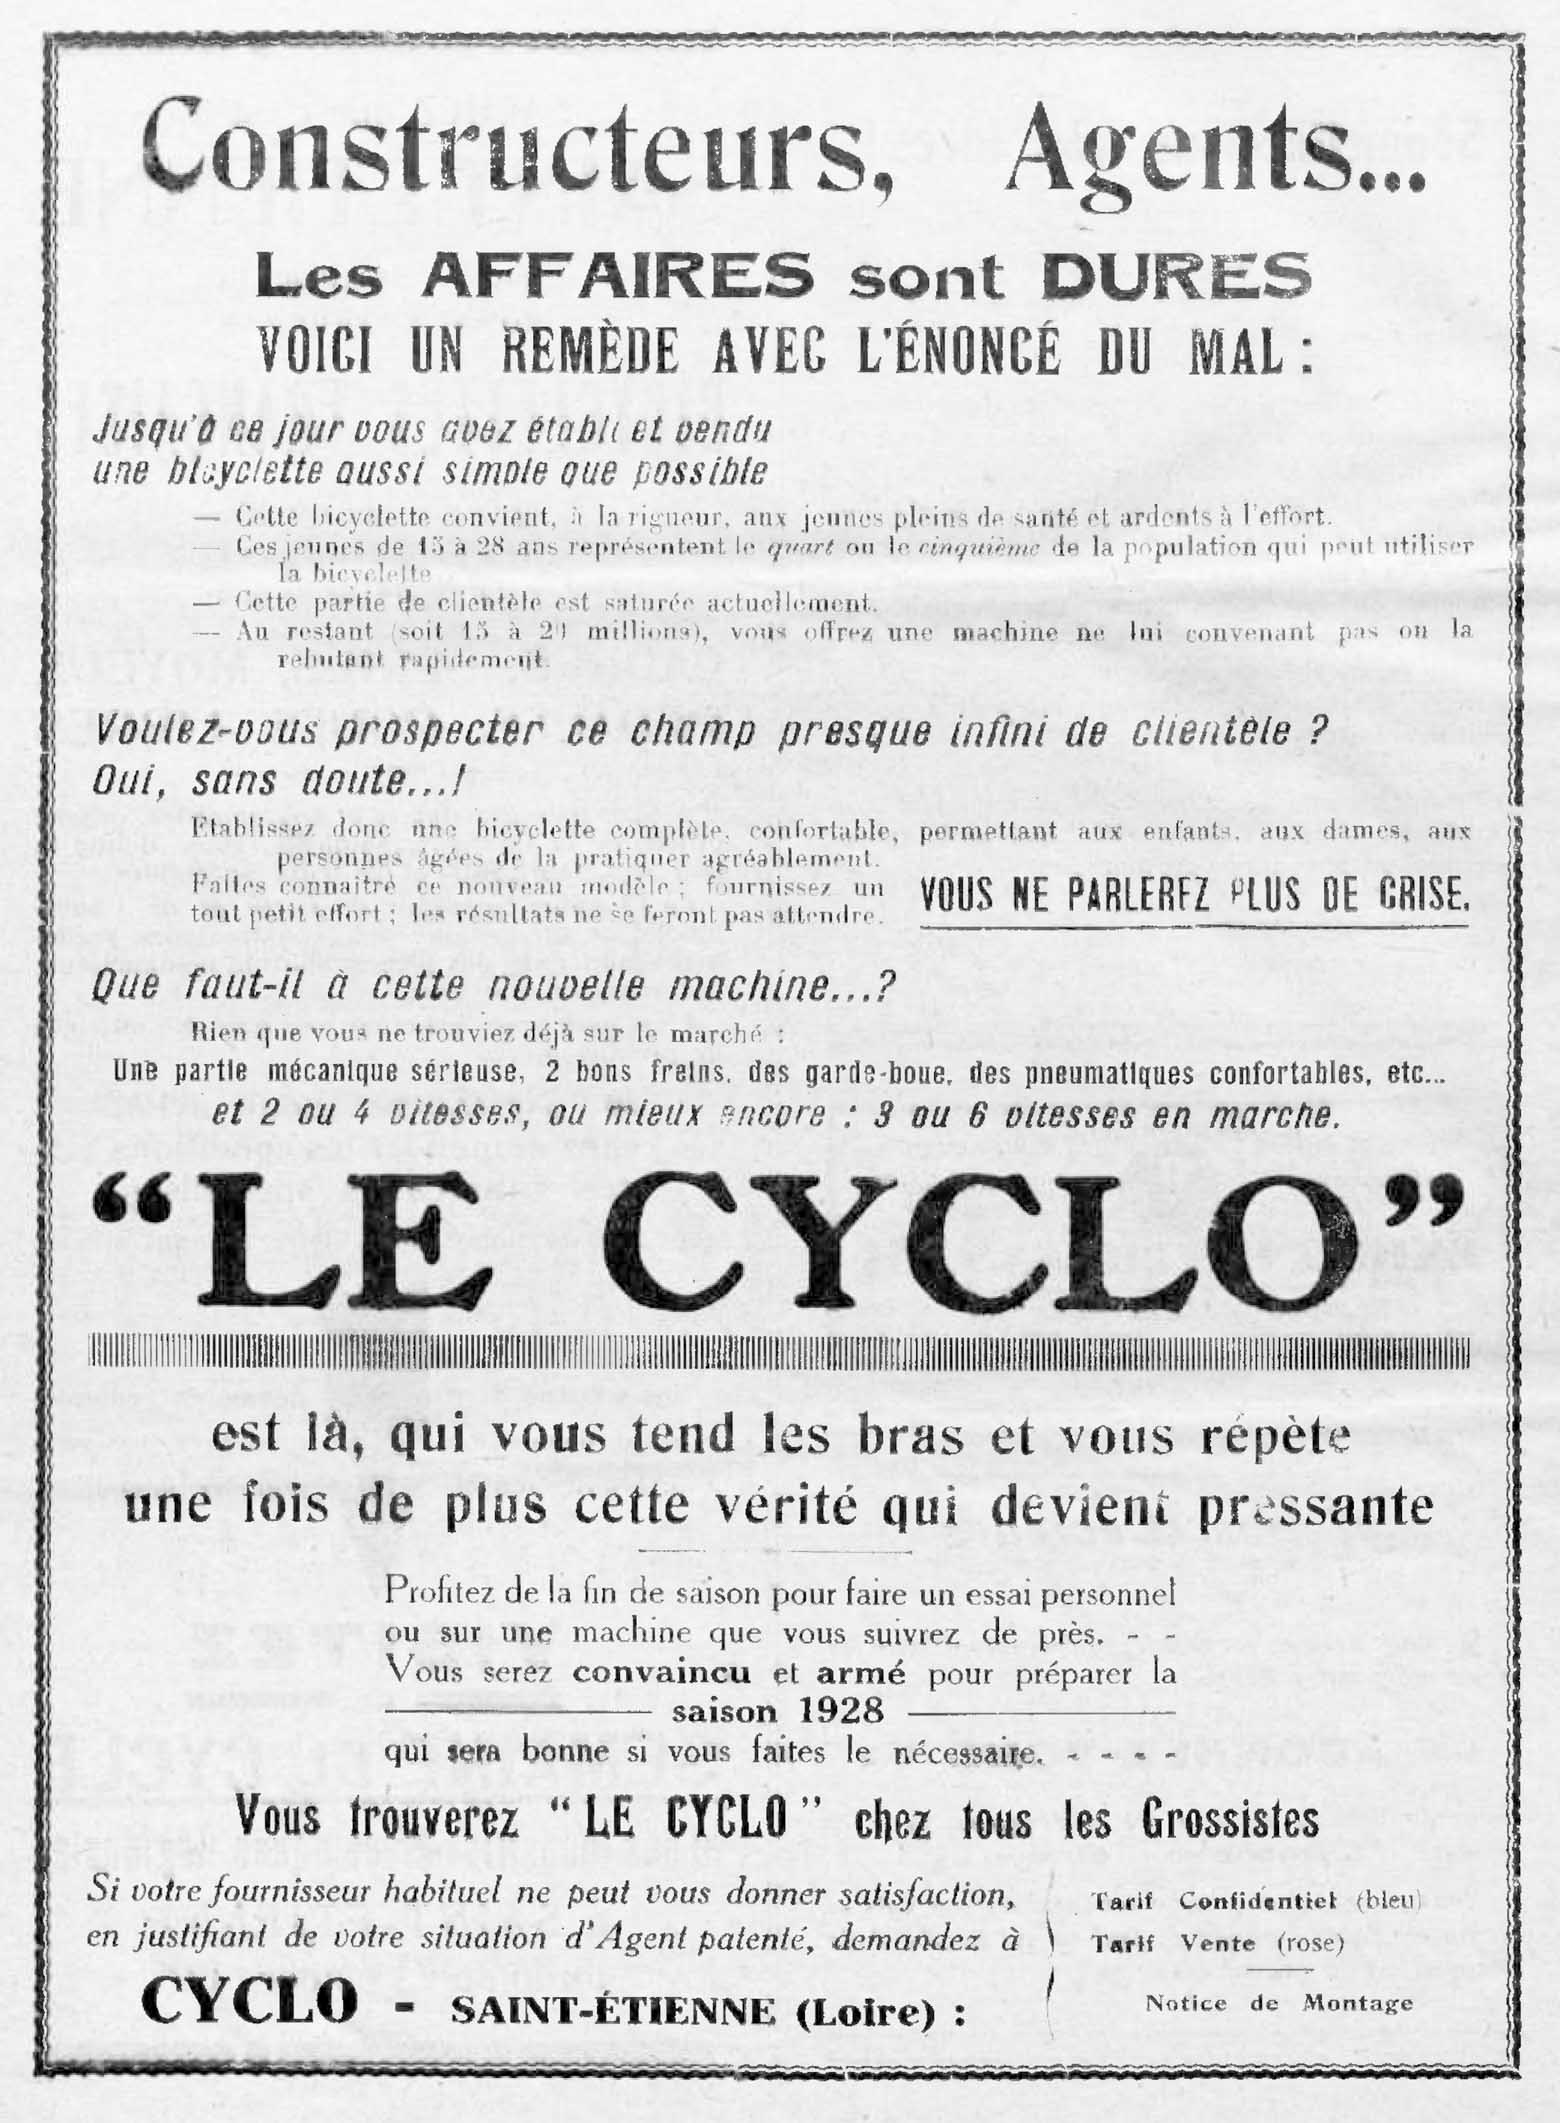 L'Industrie des Cycles et Automobiles September 1927 - Cyclo advert main image